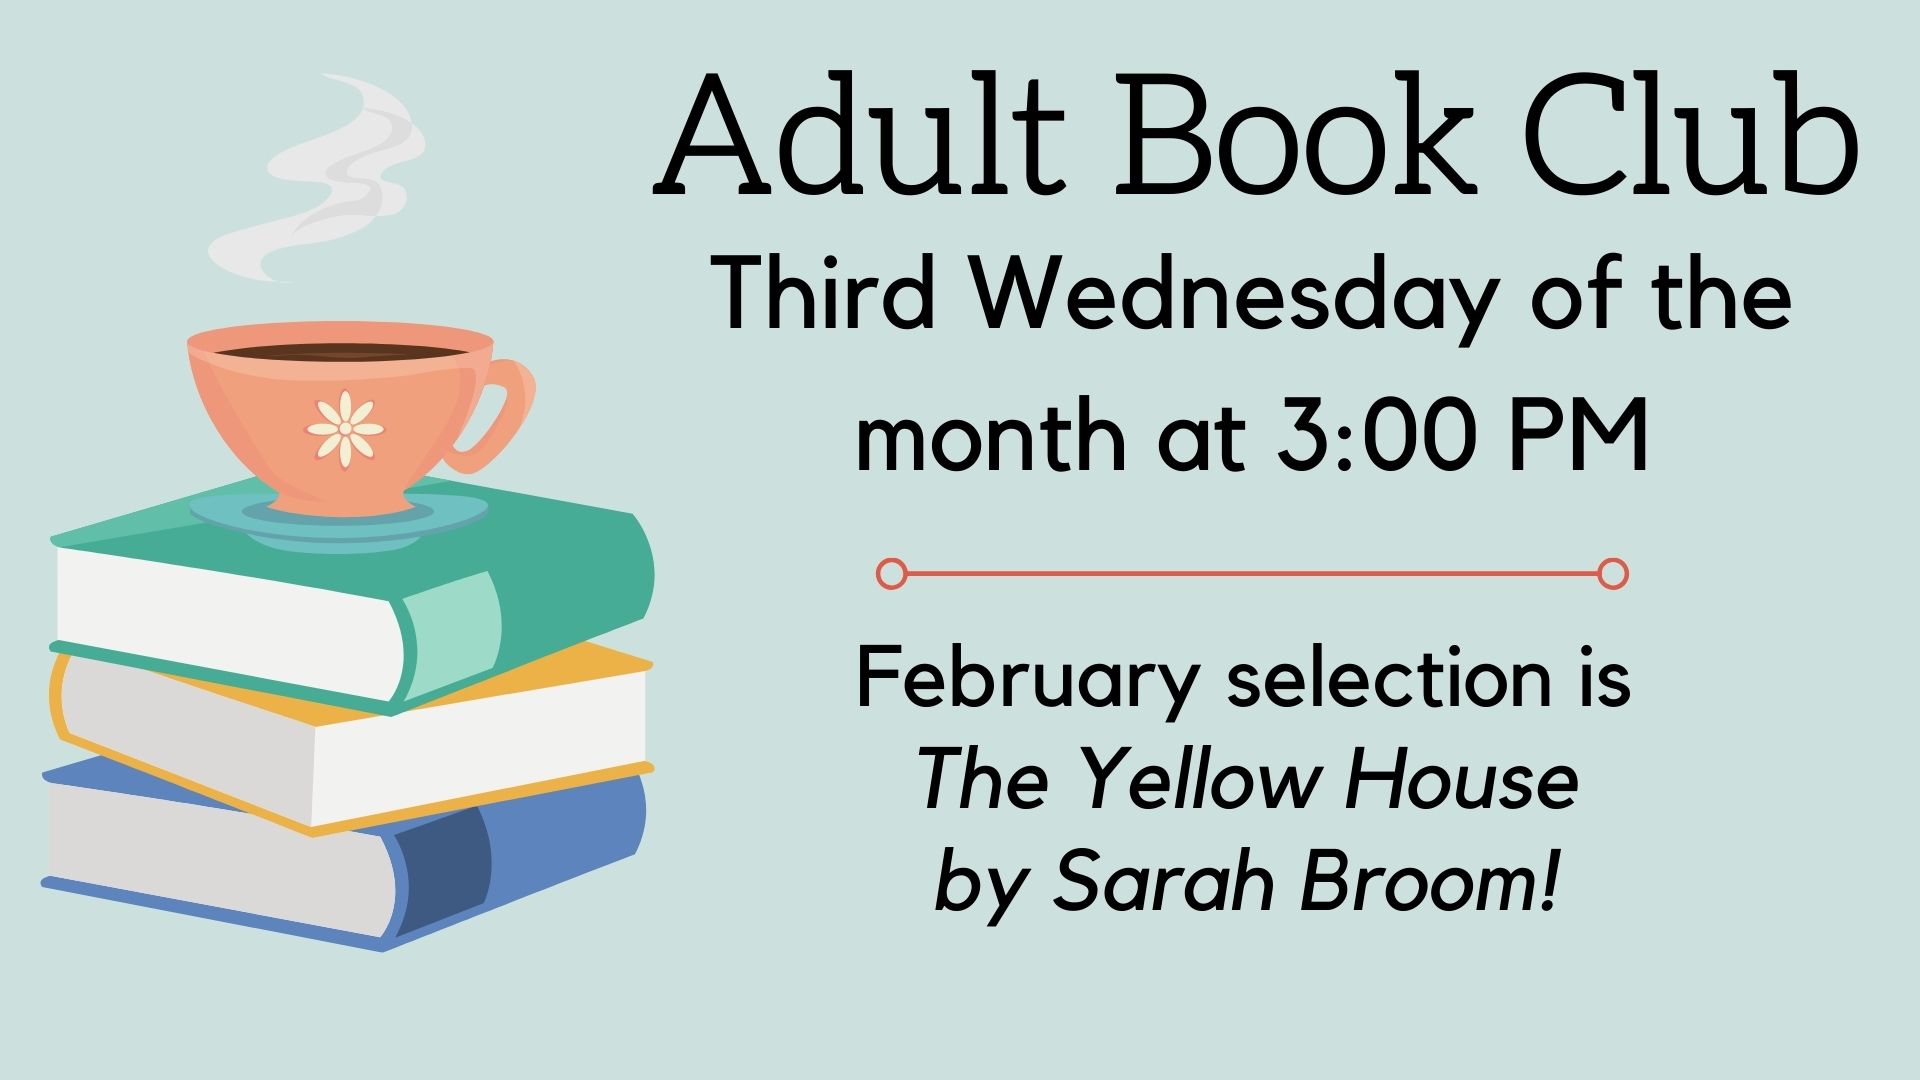 Adult Book Club February